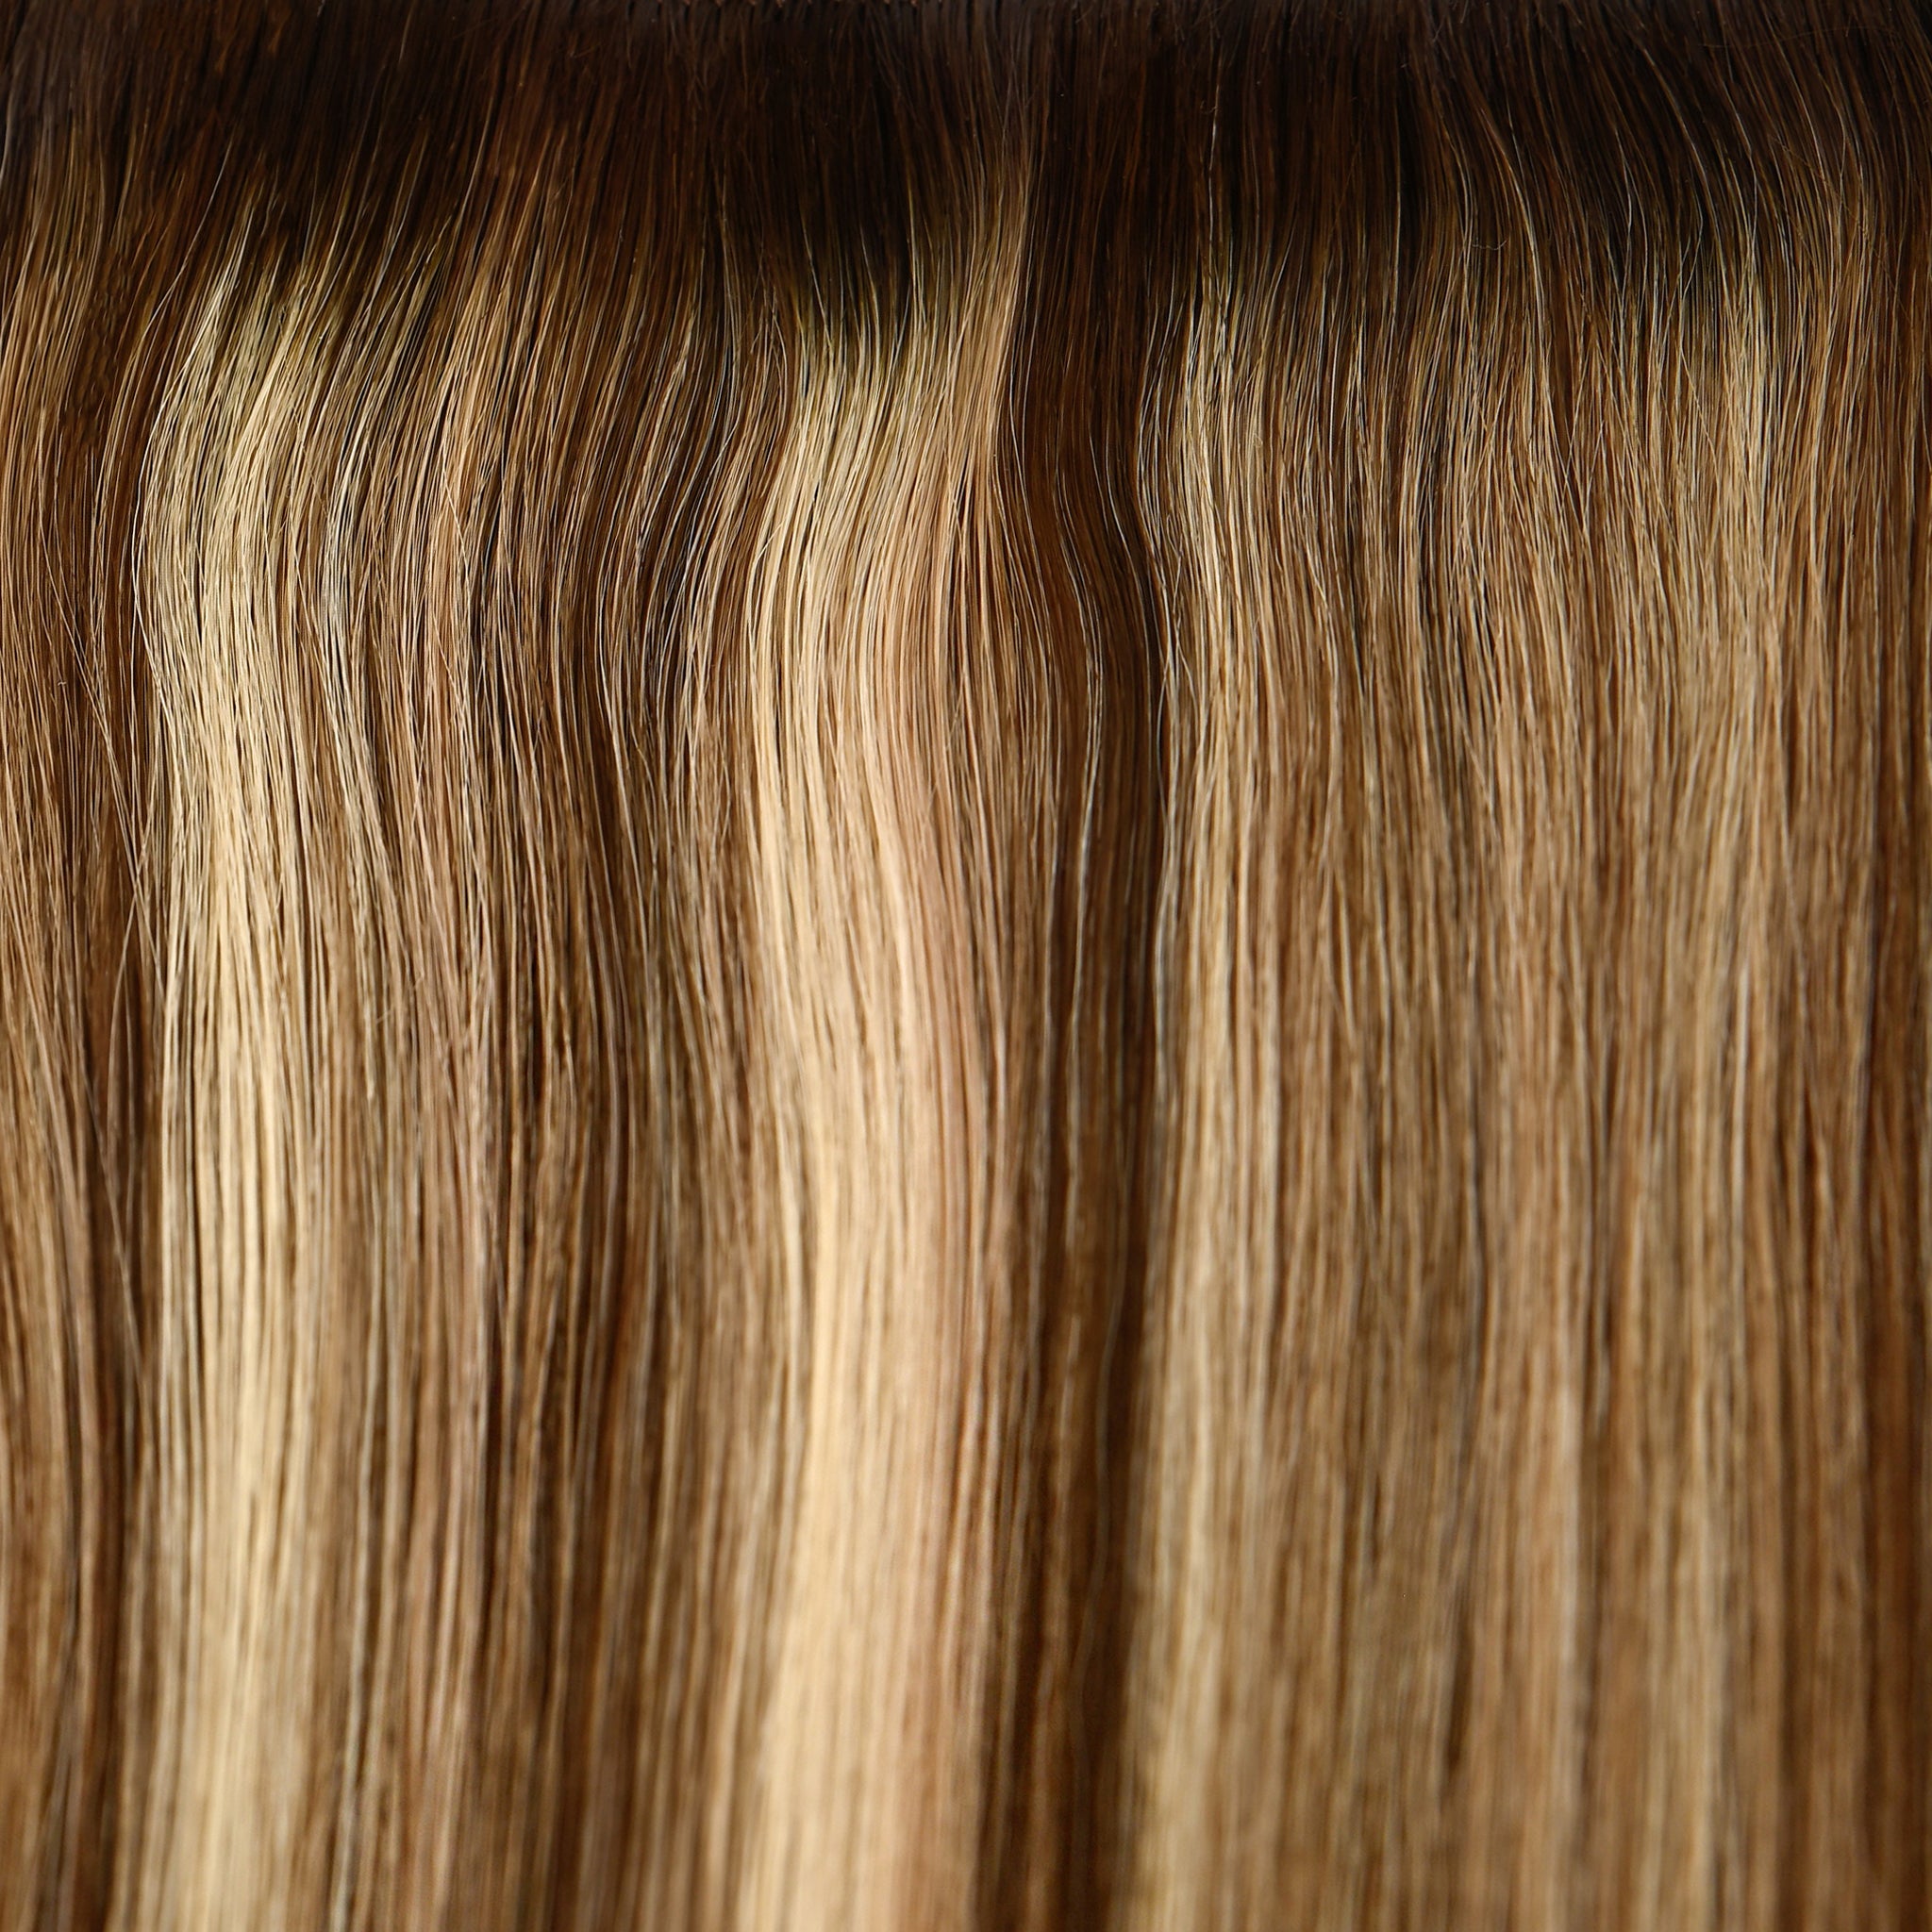 Medium Brown Beige Blonde 'Echo' Root Tap Blend Aura Hair Extension